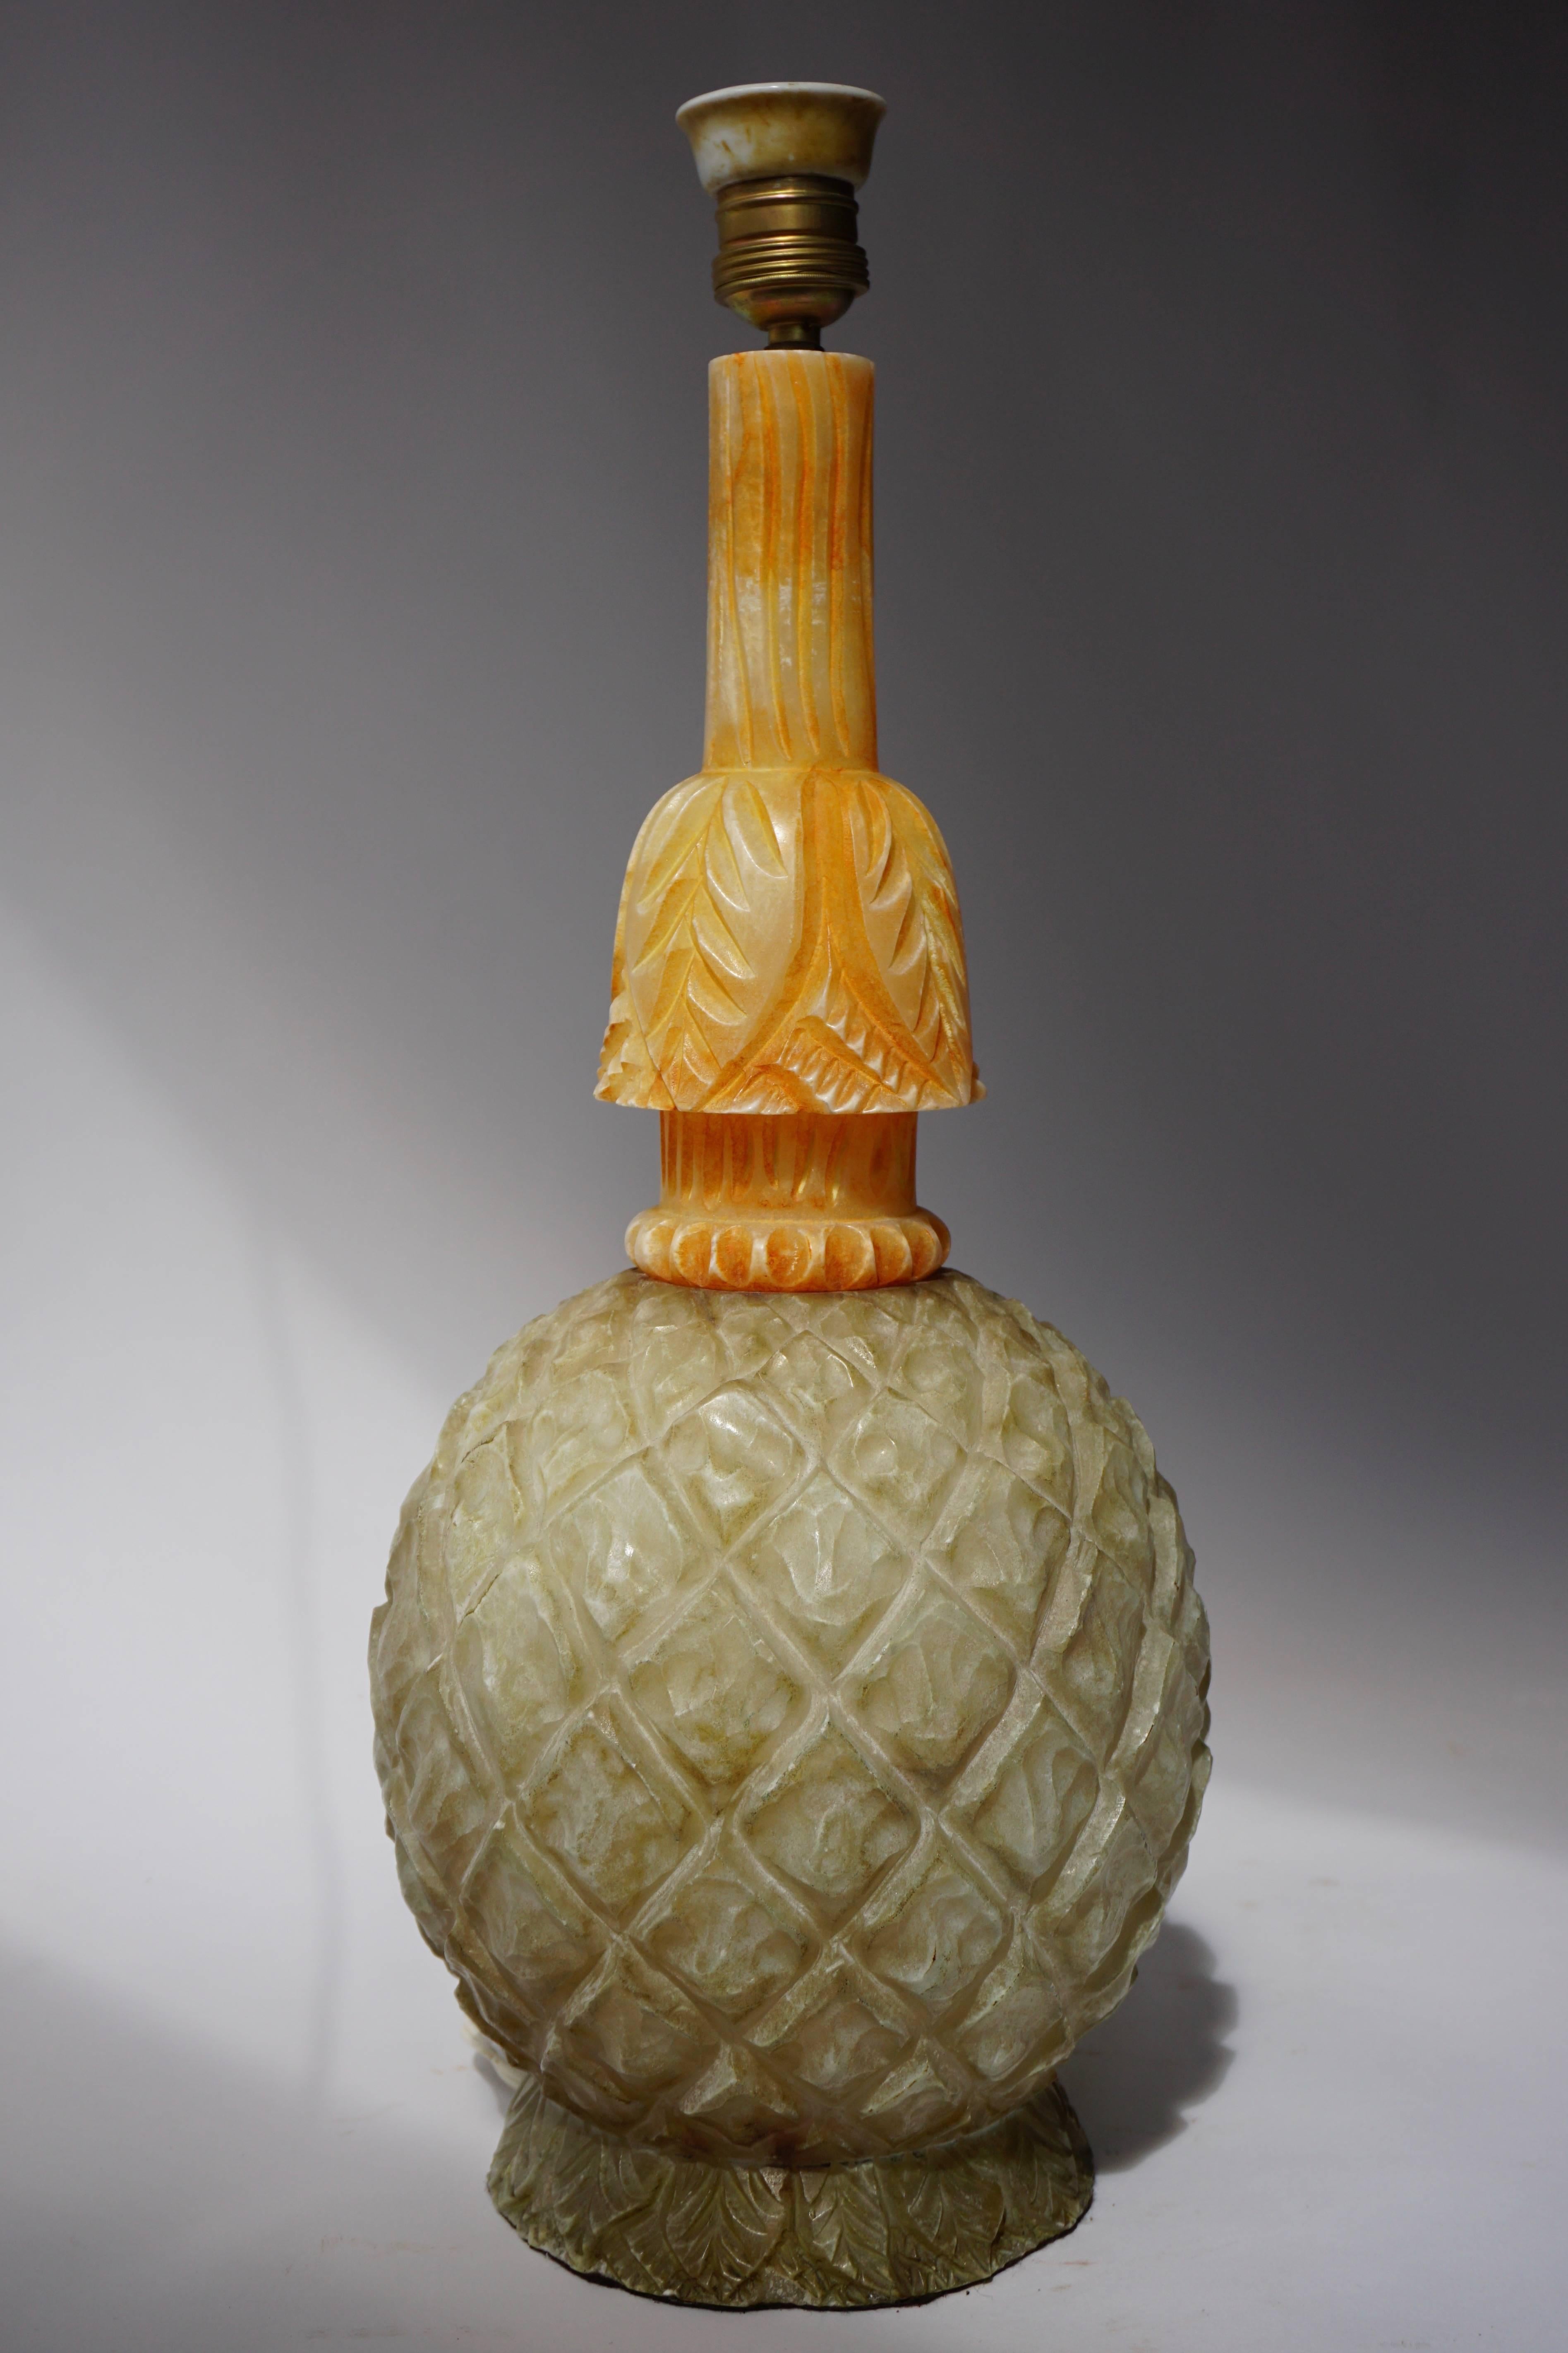 Alabaster pineapple table lamp.
Measures: 
Diameter 23 cm.
Height 53 cm.
Weight 9 kg.
          